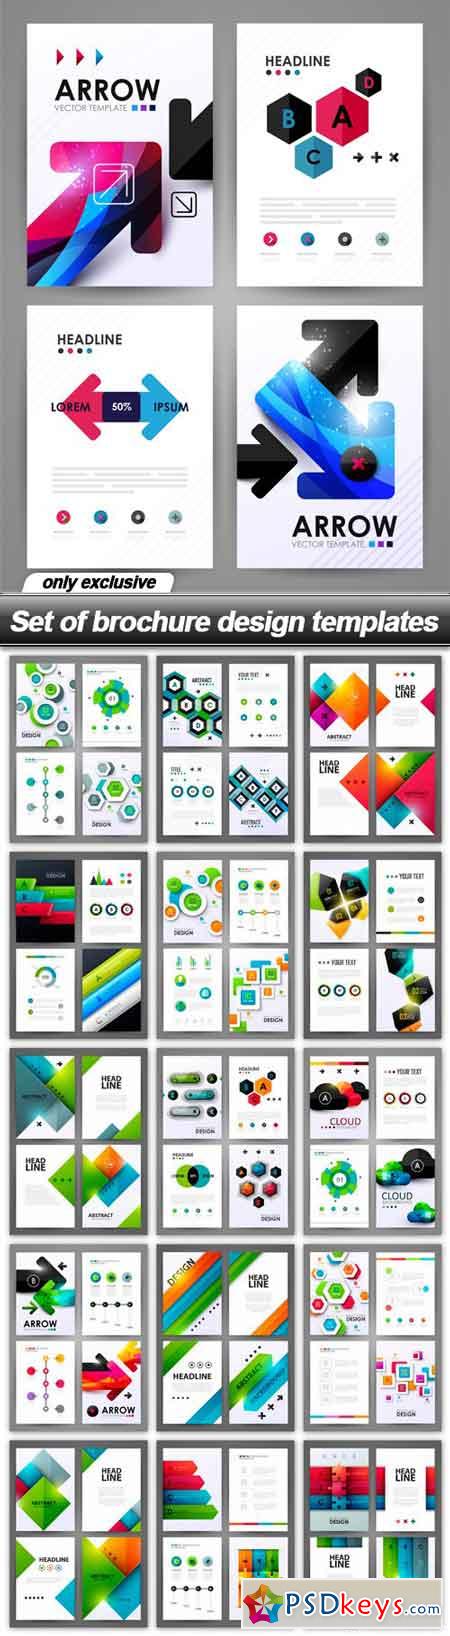 Set of brochure design templates - 16 EPS